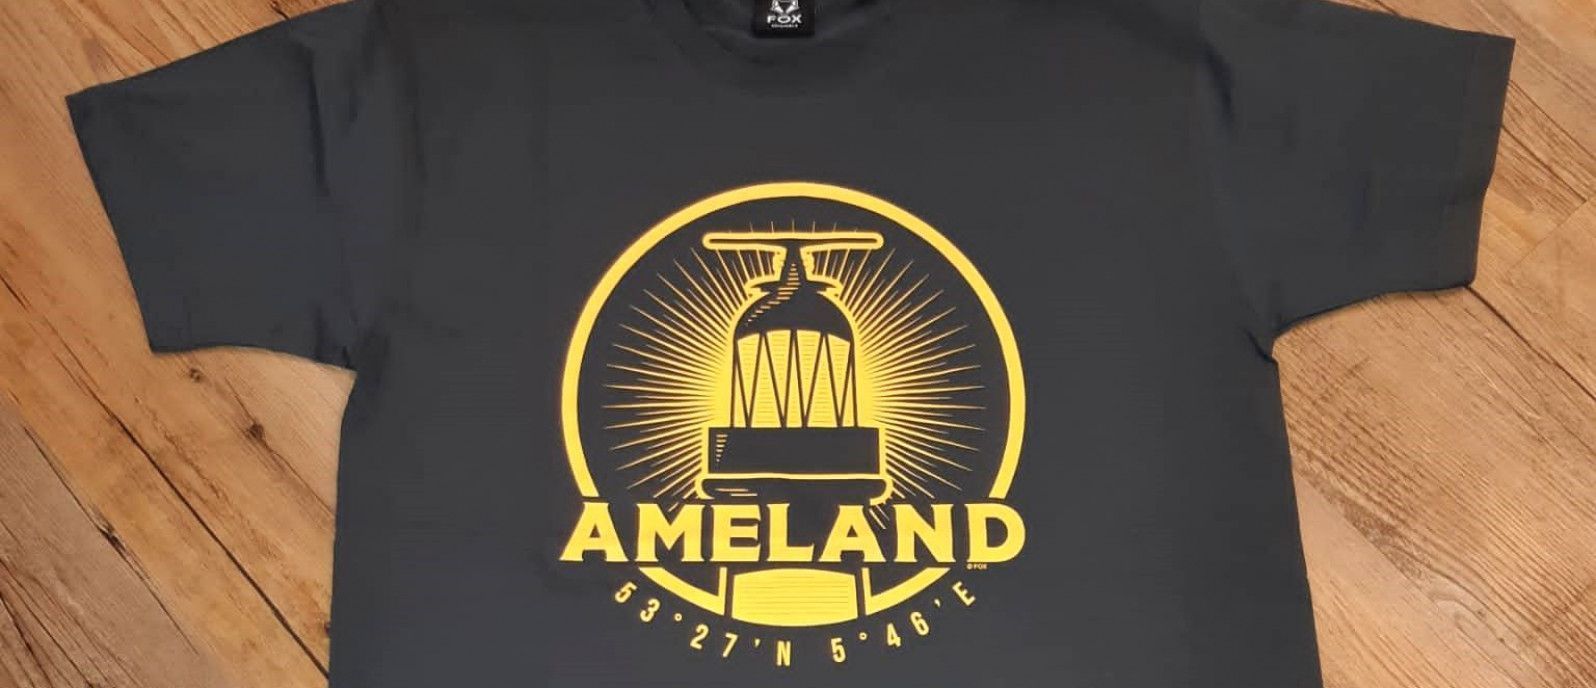 t-shirt - webshop VVV Ameland